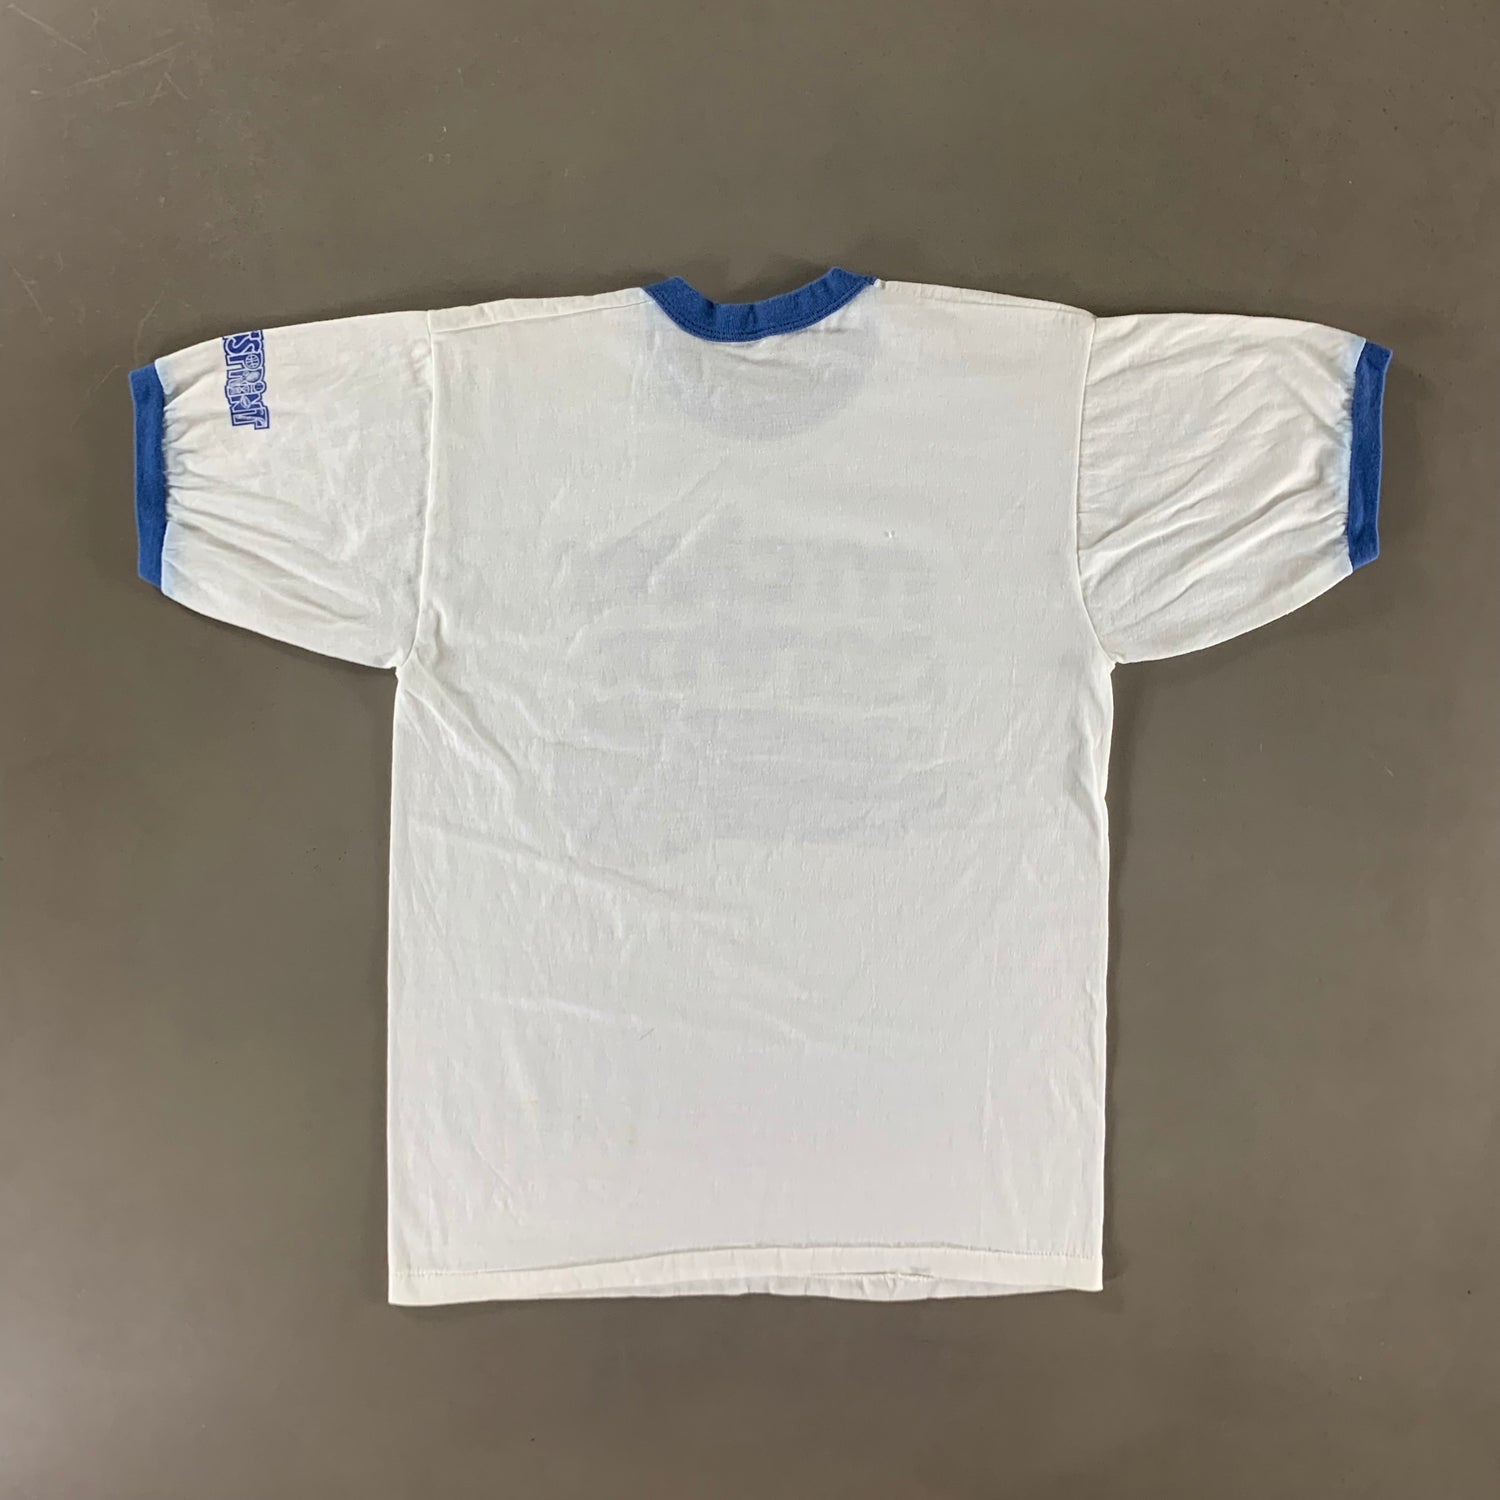 Vintage 1984 Soccer T-shirt size Medium